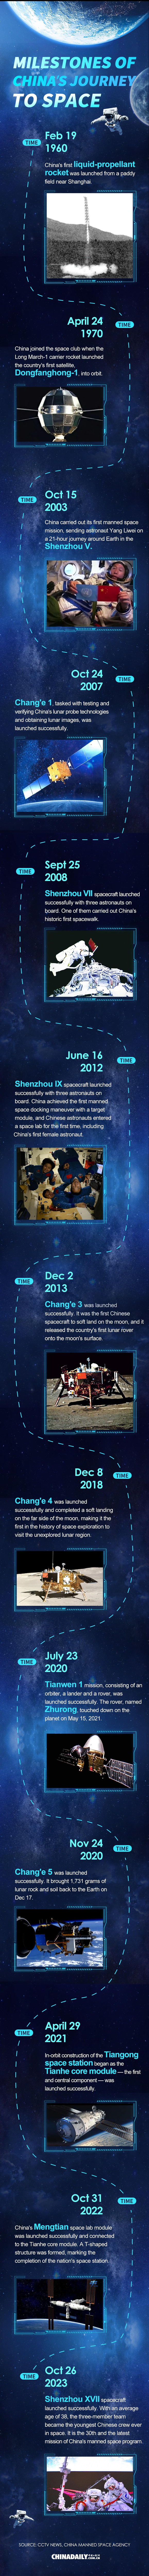 Milestones of China's journey to space